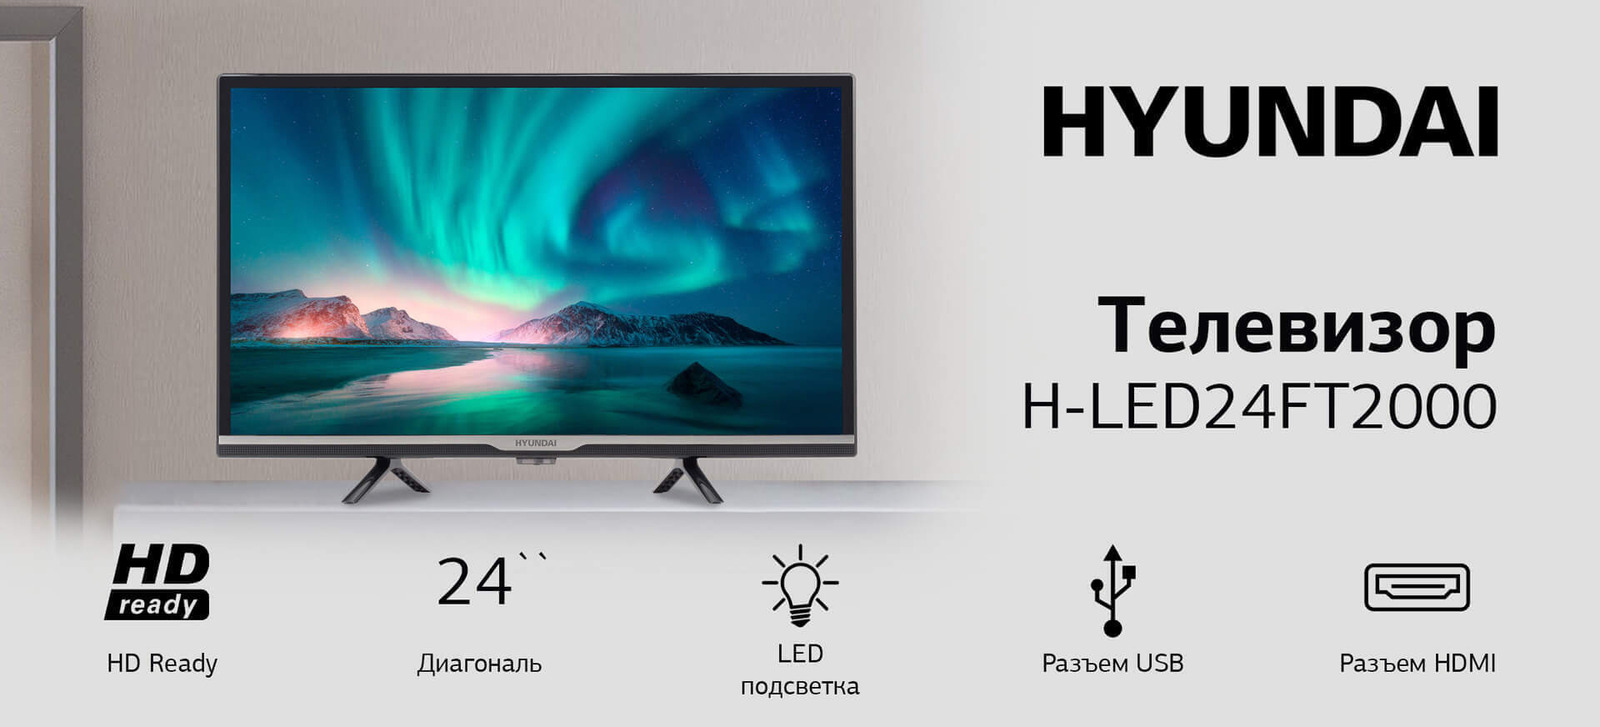 Телевизор Hyundai H-LED24FT2000